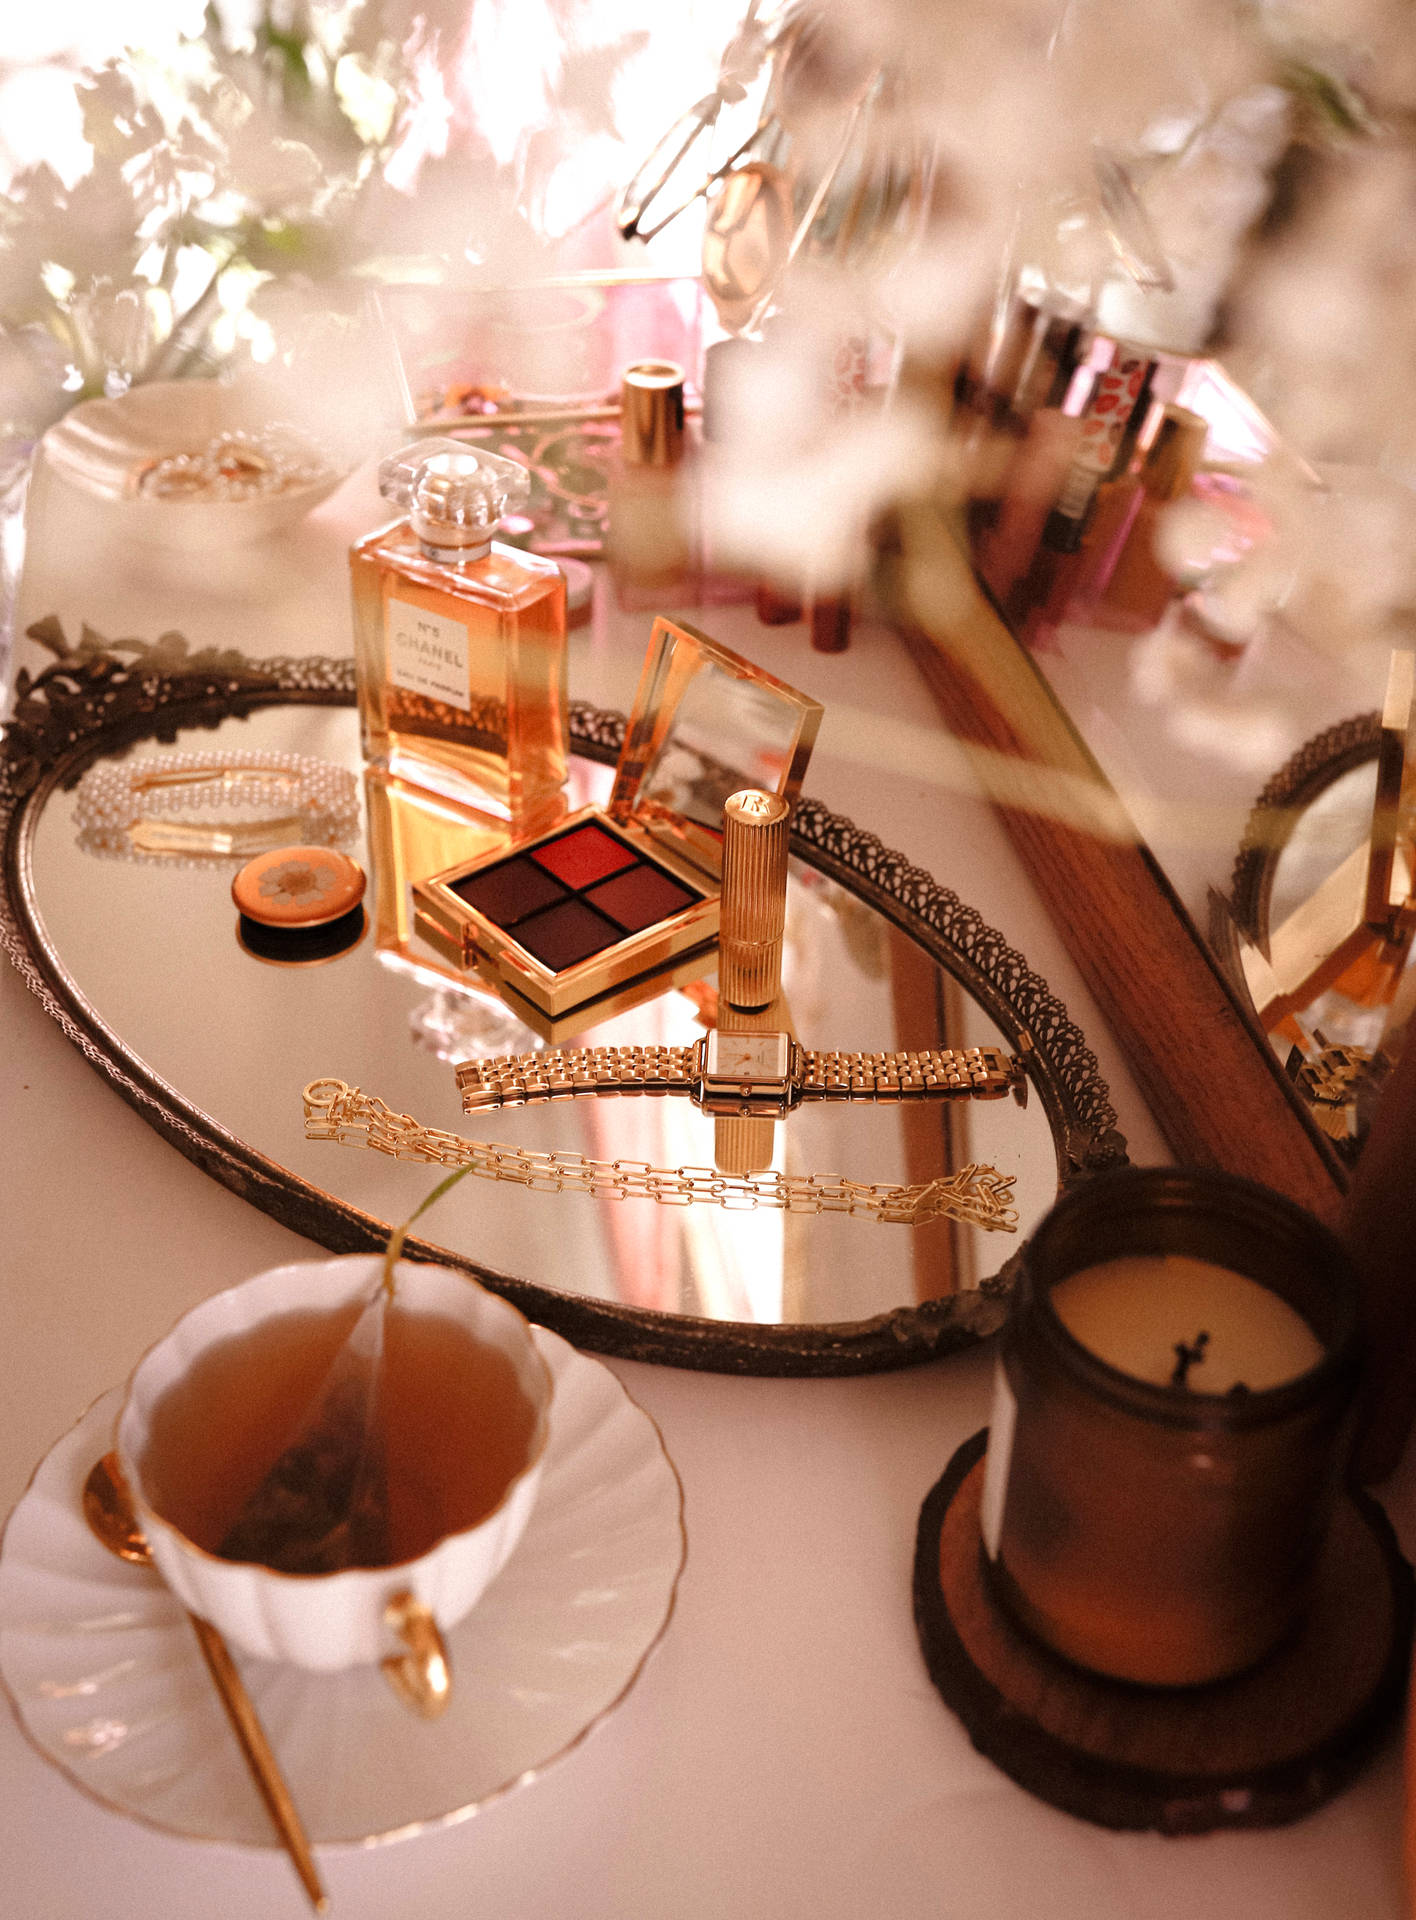 Chanel Cosmetics Set On Table